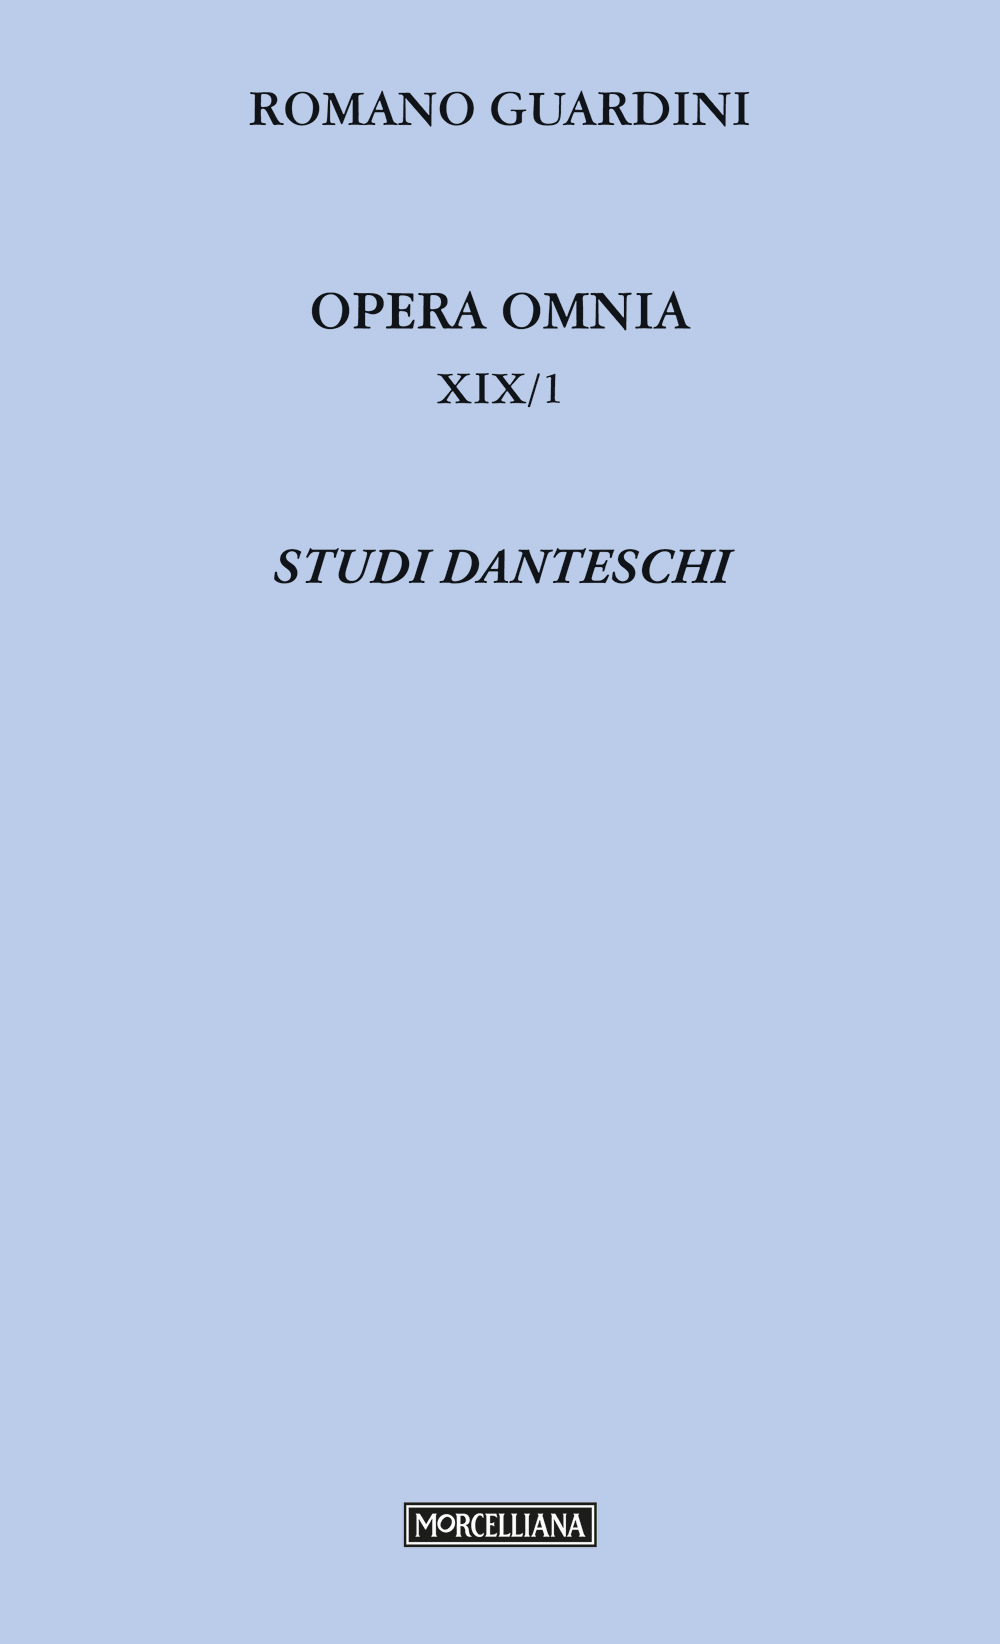 Opera omnia. Vol. 19/1: Studi danteschi